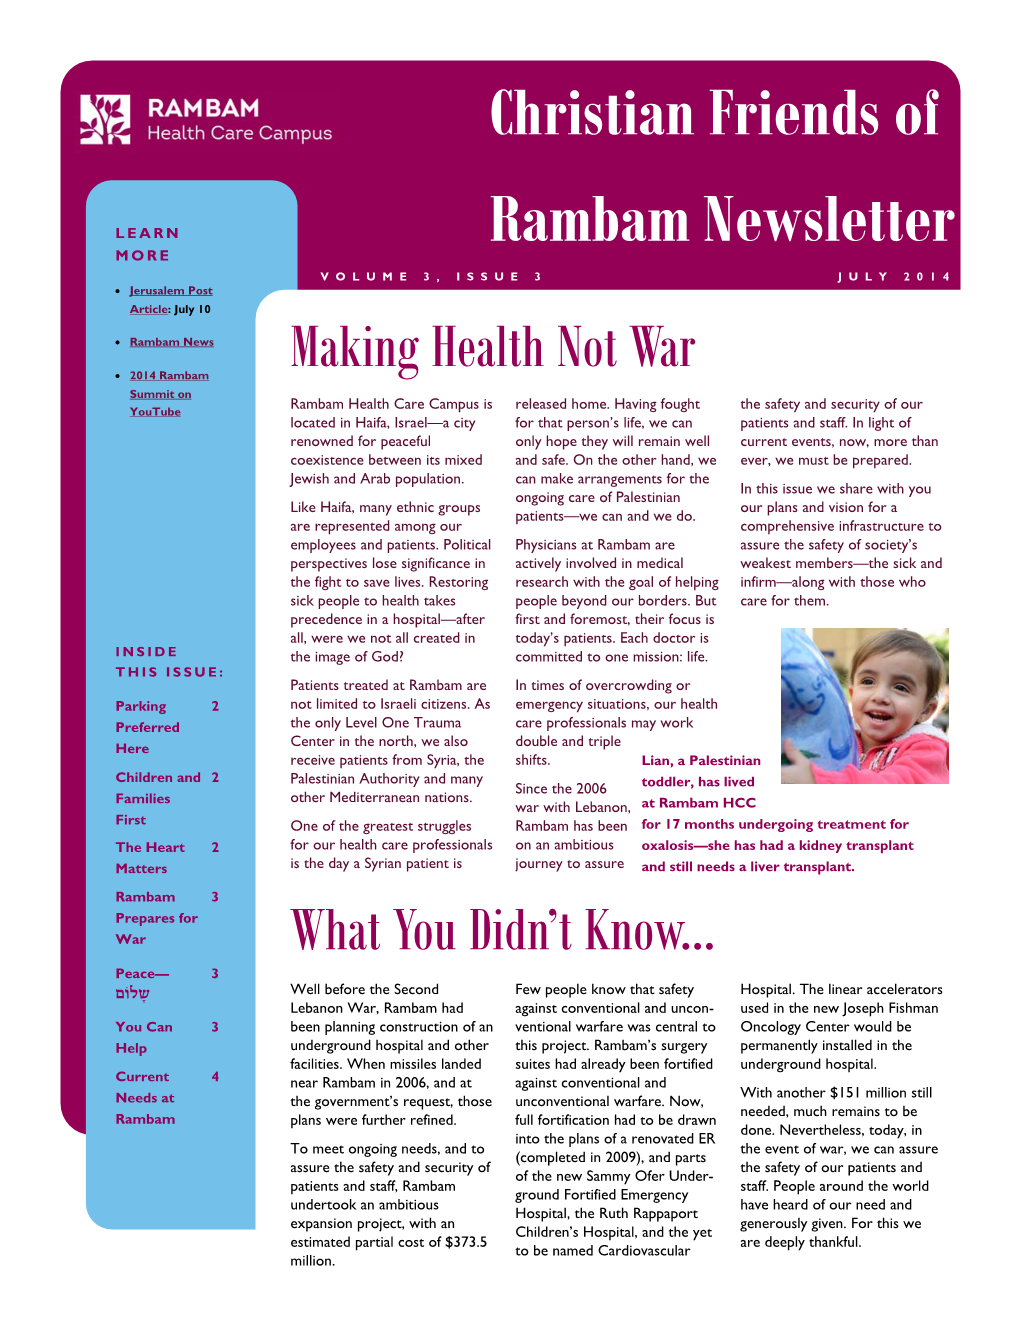 Christian Friends of Rambam Newsletter | July 2014 | Volume 3